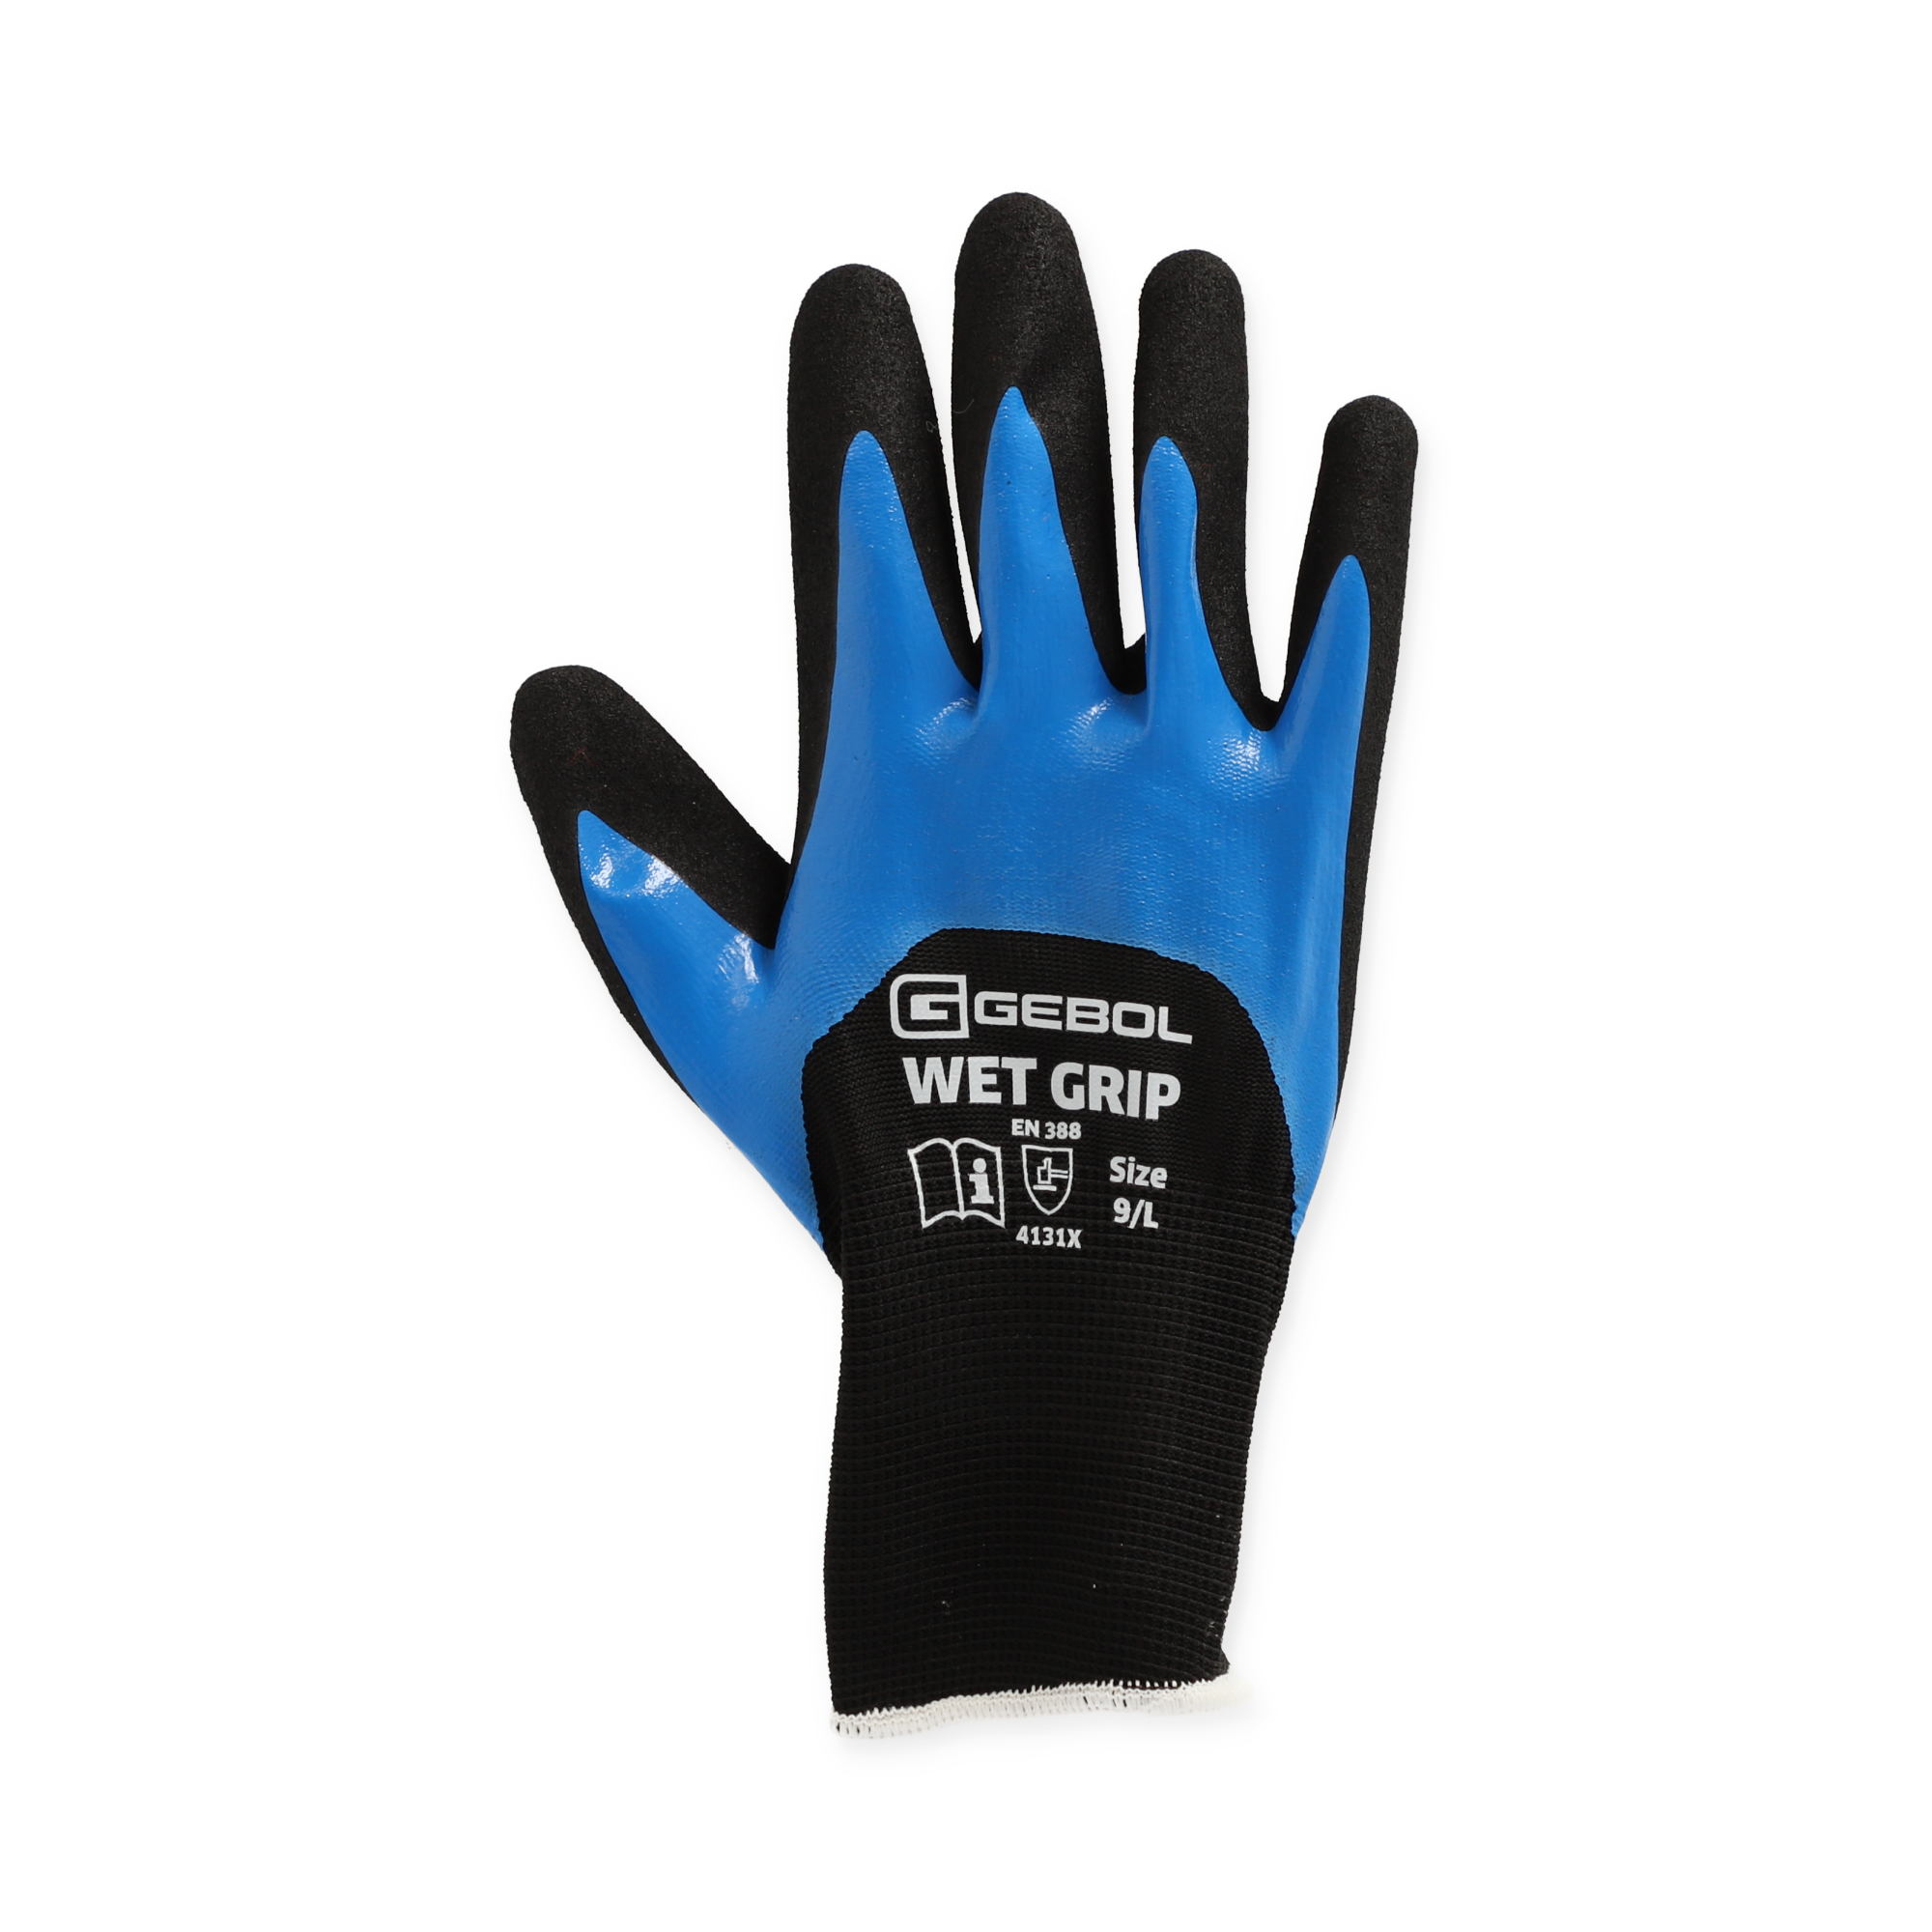 Handschuhe 'Wet Grip' blau Gr. 9 + product picture